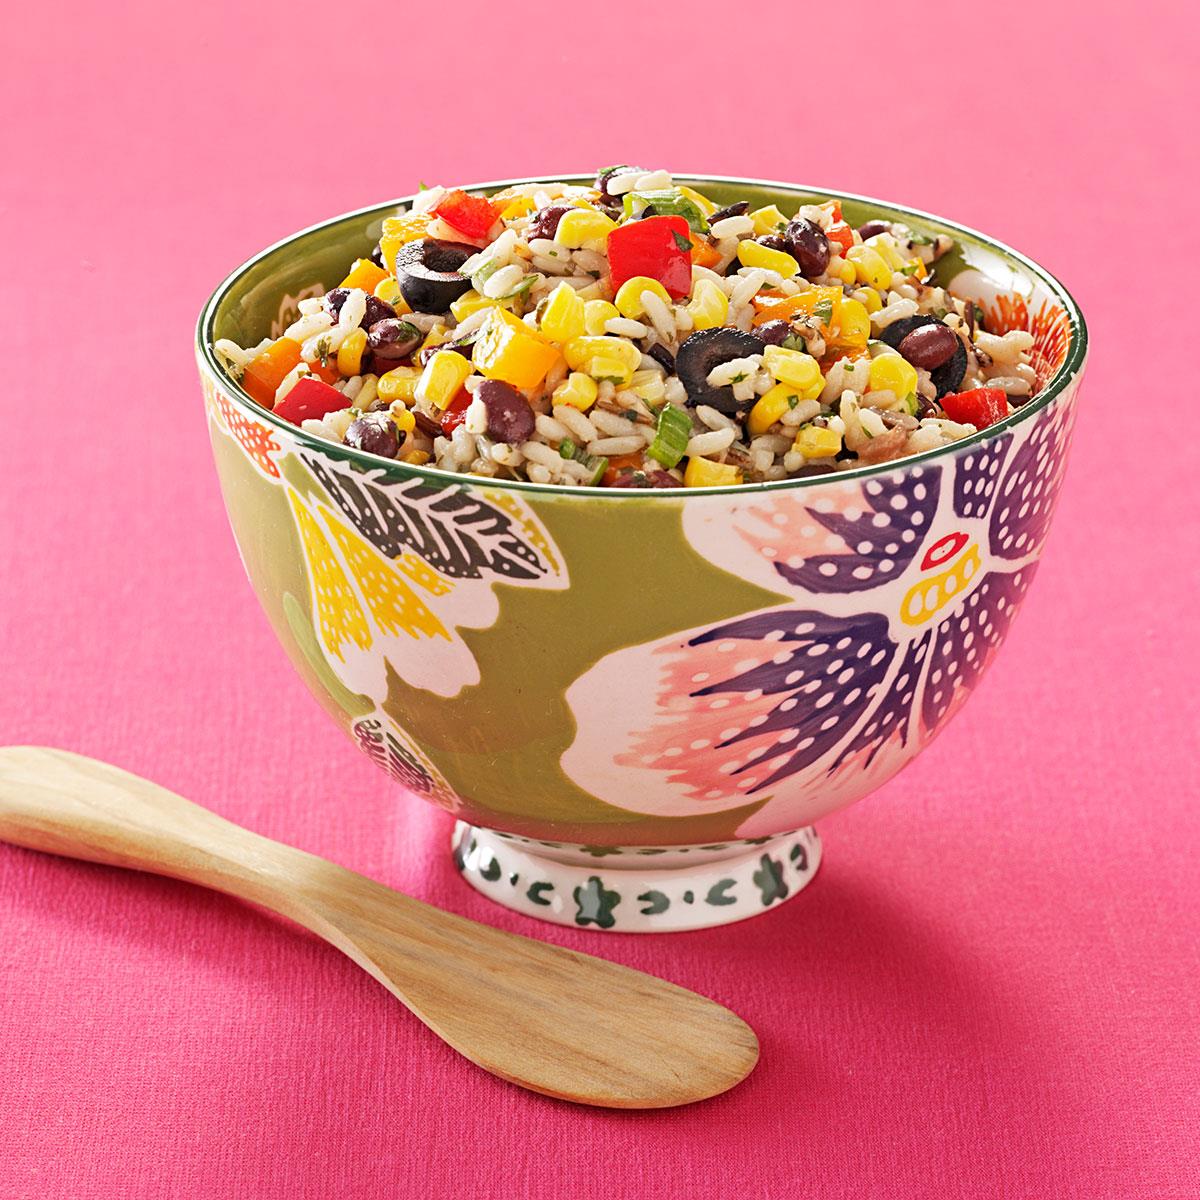 Fiesta Rice and Bean Salad image